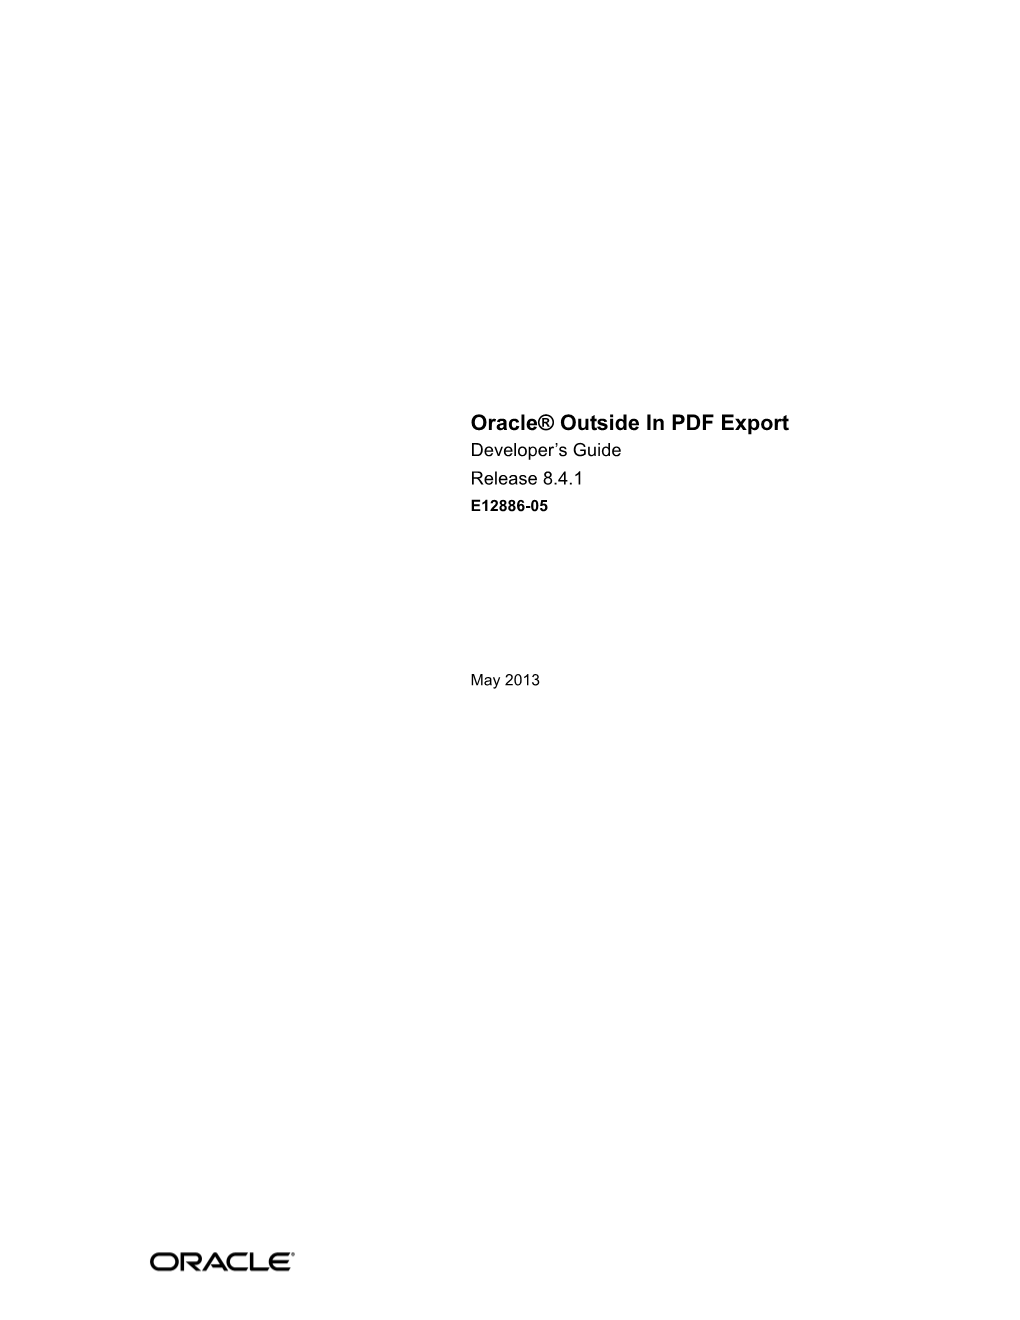 Outside in PDF Export Developer's Guide, Release 8.4.1 E12886-05